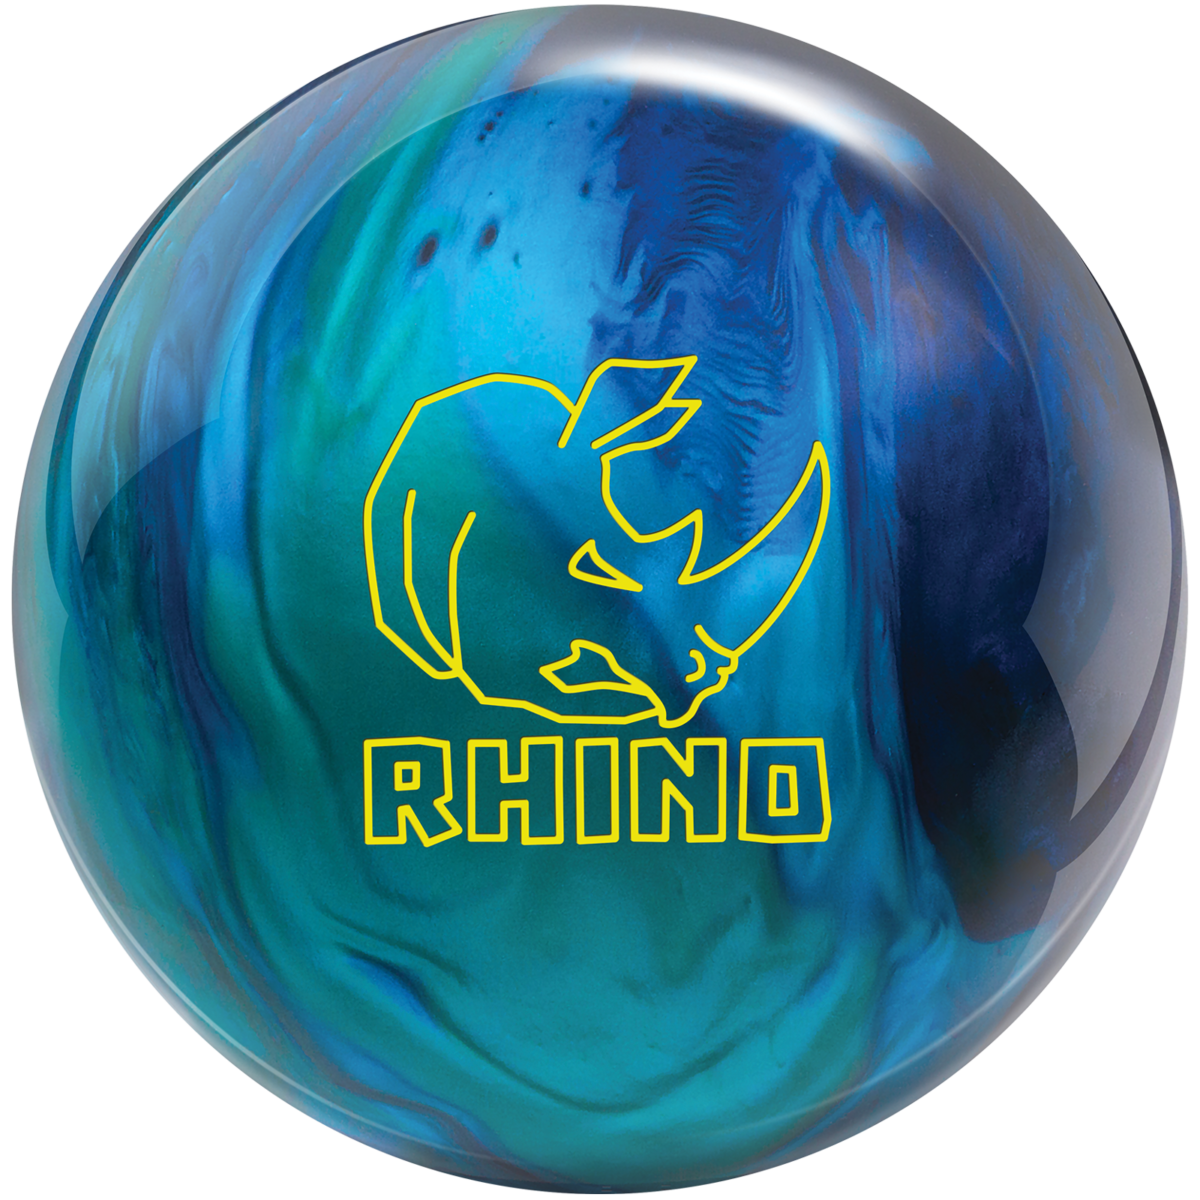 Brunswick Rhino Red Black Gold Bowling Ball NIB 1st Quality 